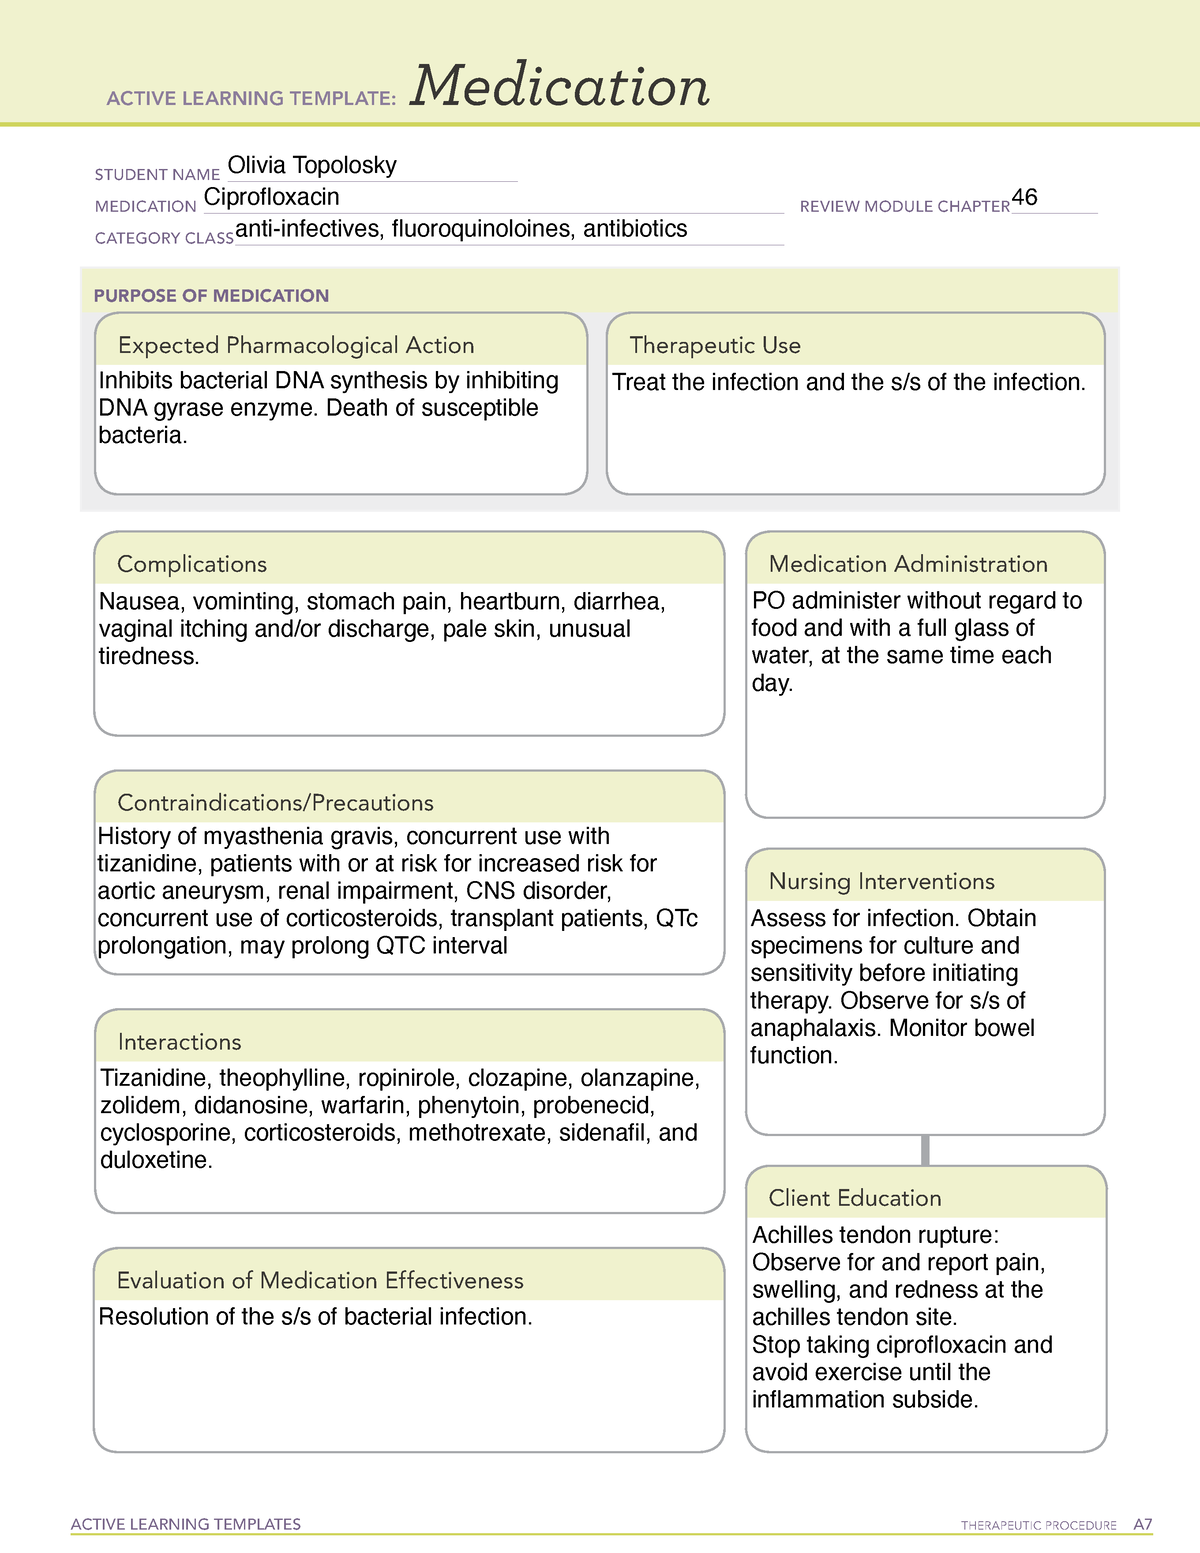 ciprofloxacin-medication-template-active-learning-templates